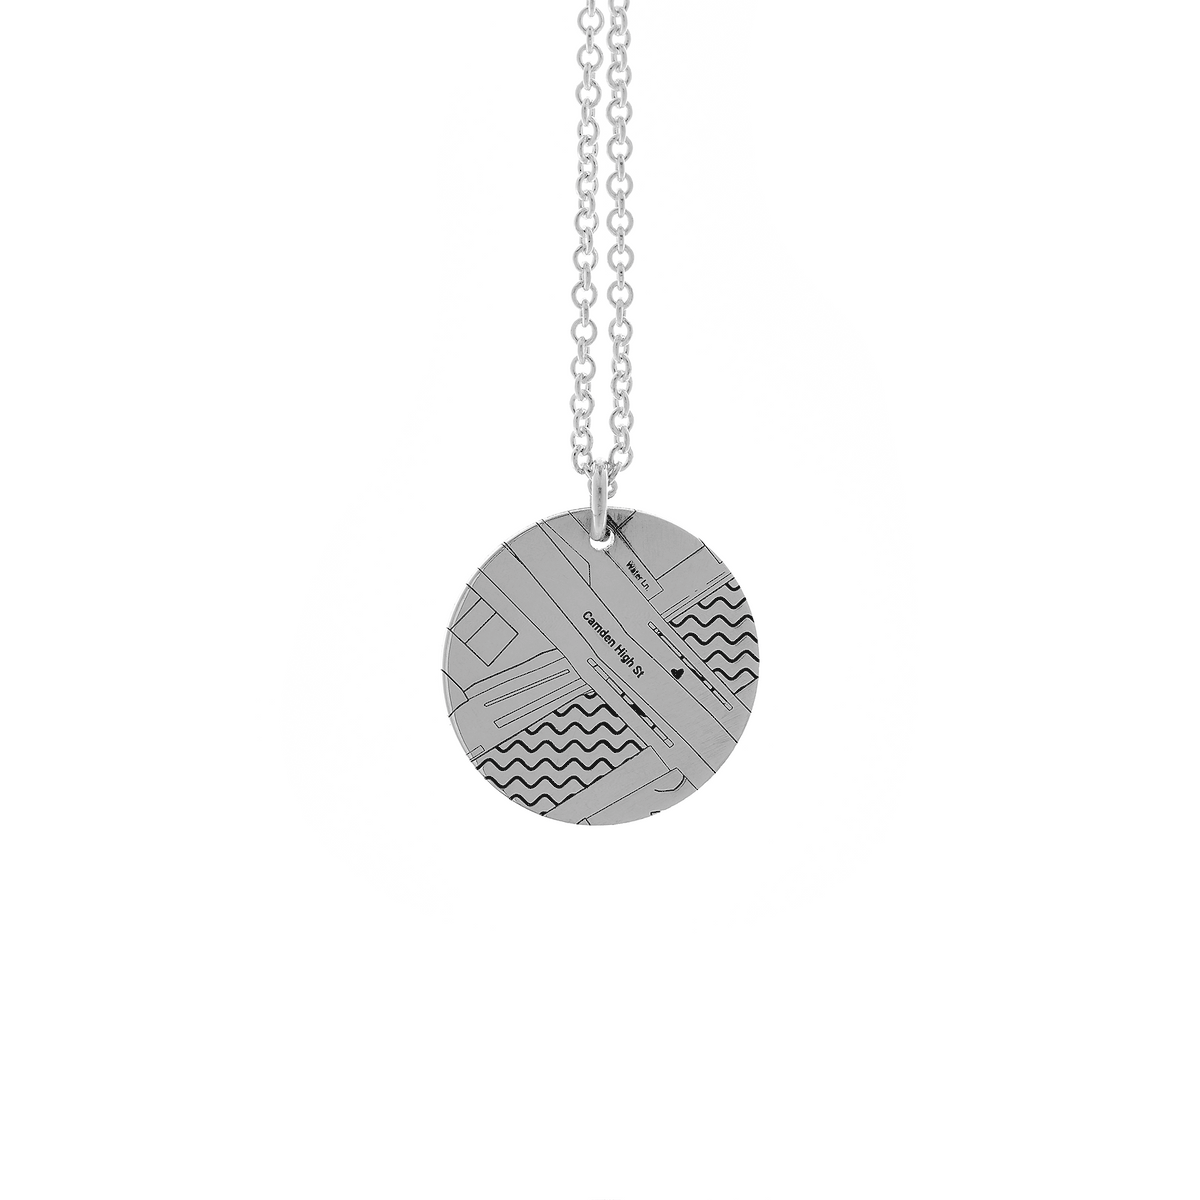 custom location address street map necklace pendant sterling silver bespoke engraved